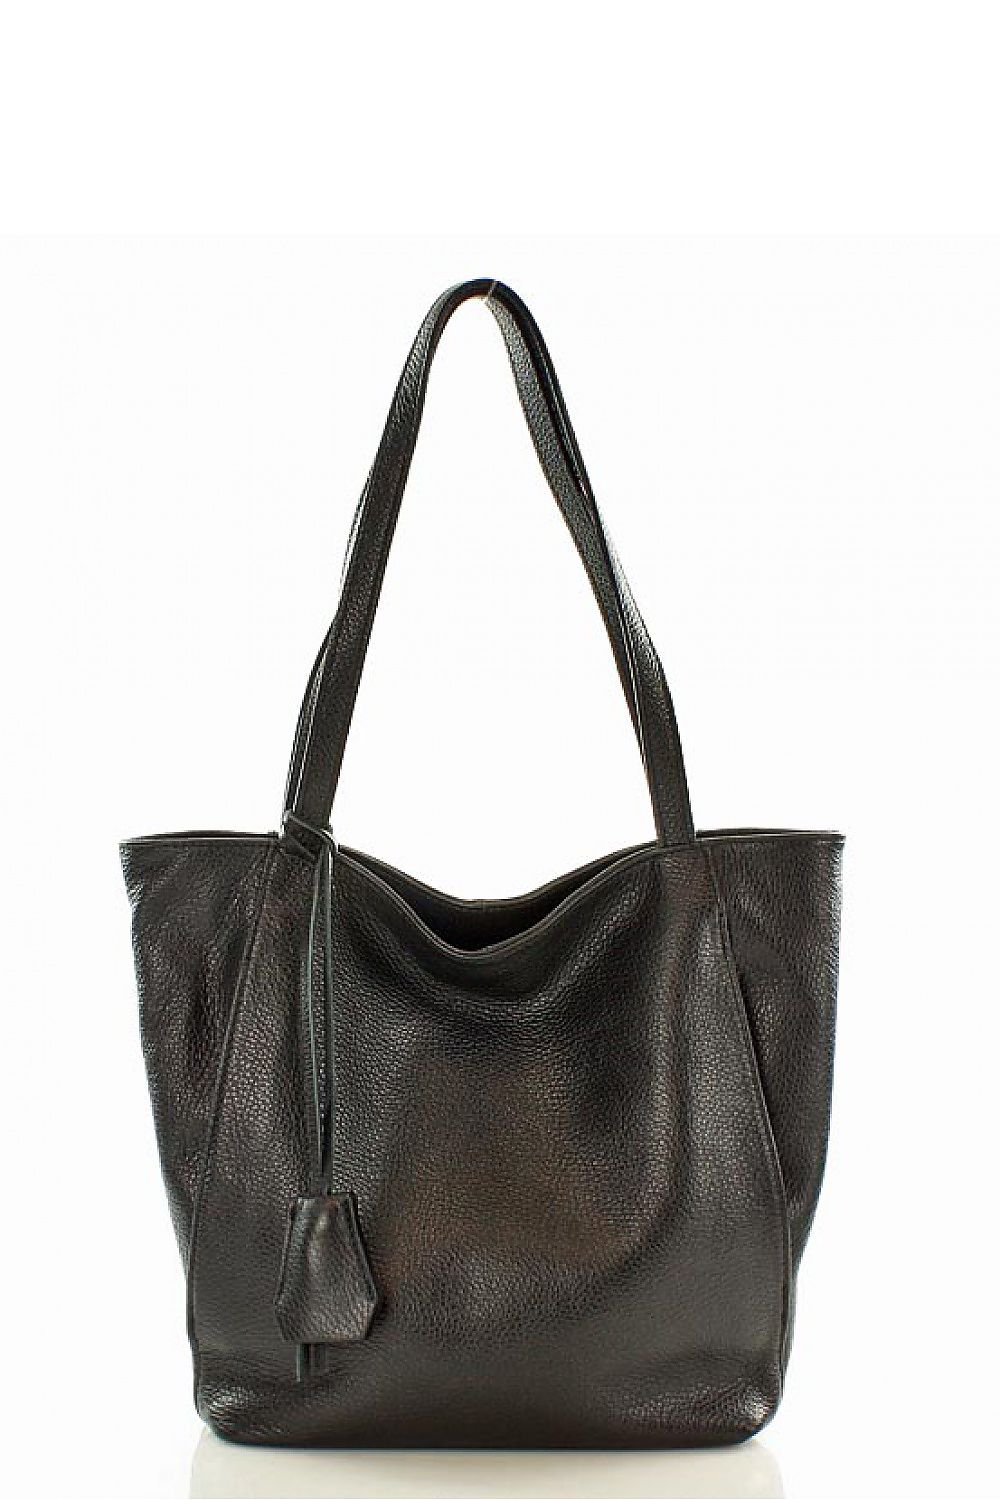 Natural leather bag model 109210 Creazioni in pelle Casual Handbags ...